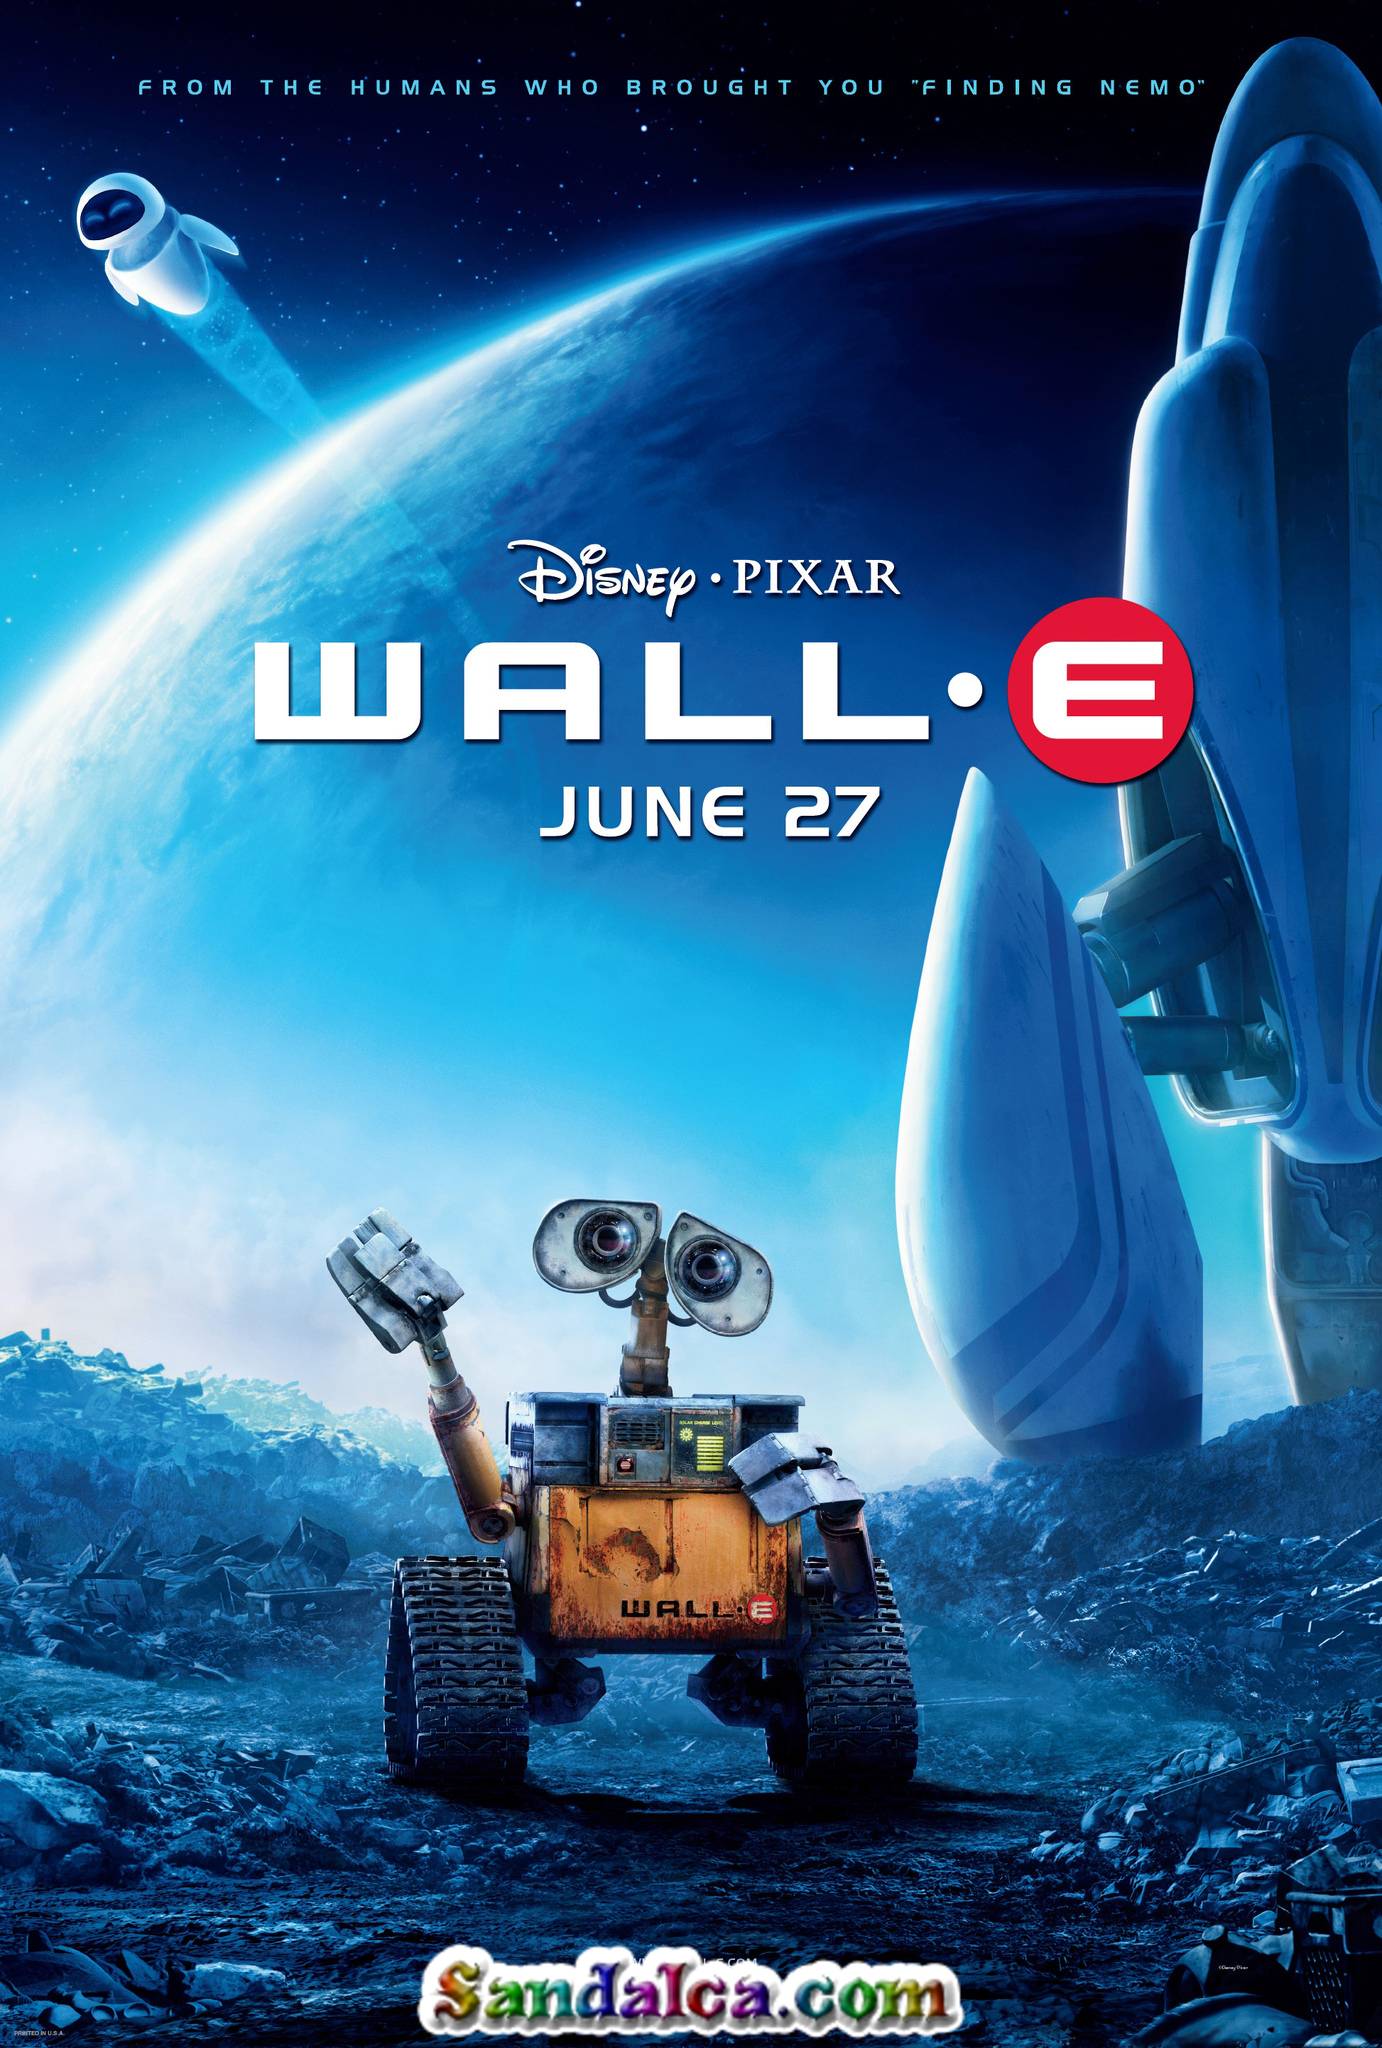 VOL-İ - WALL-E Türkçe Dublaj indir | XviD - 1080p DUAL | 2008